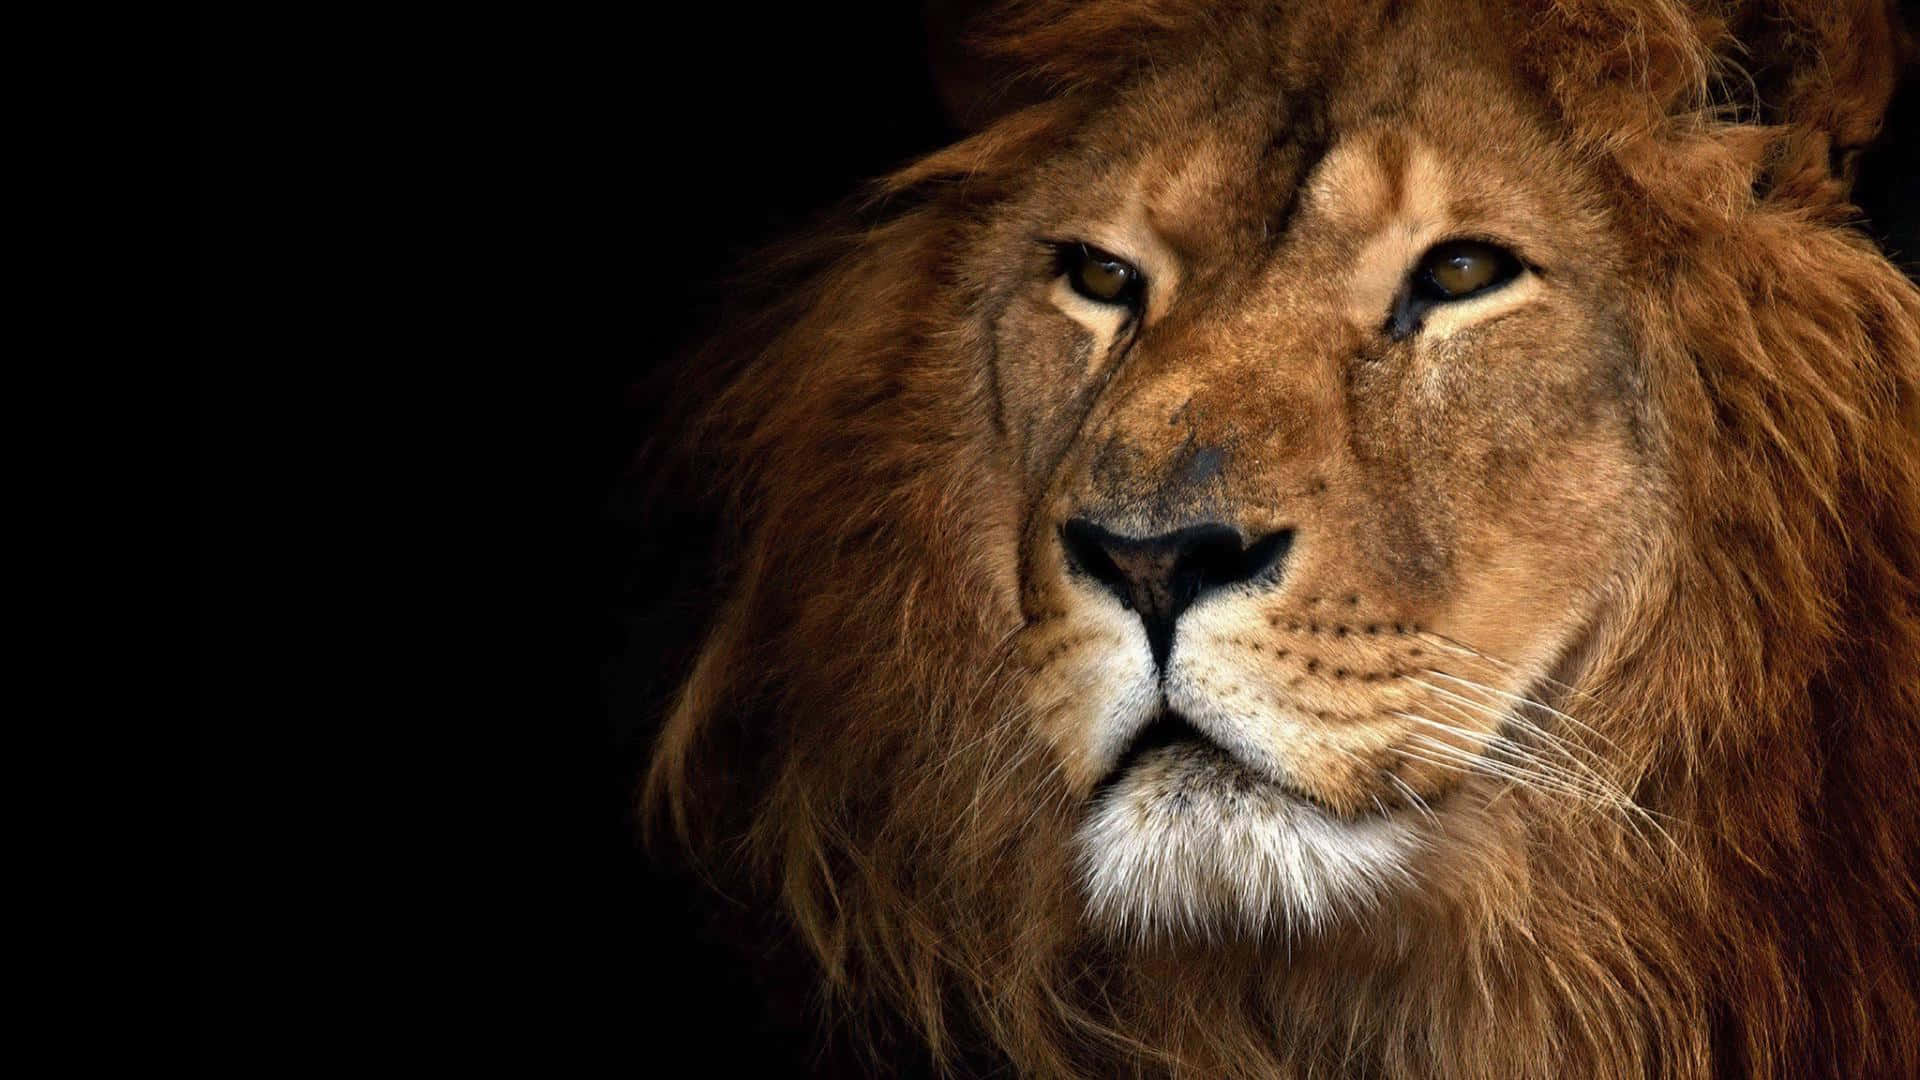 The Lion of Judah Emblem